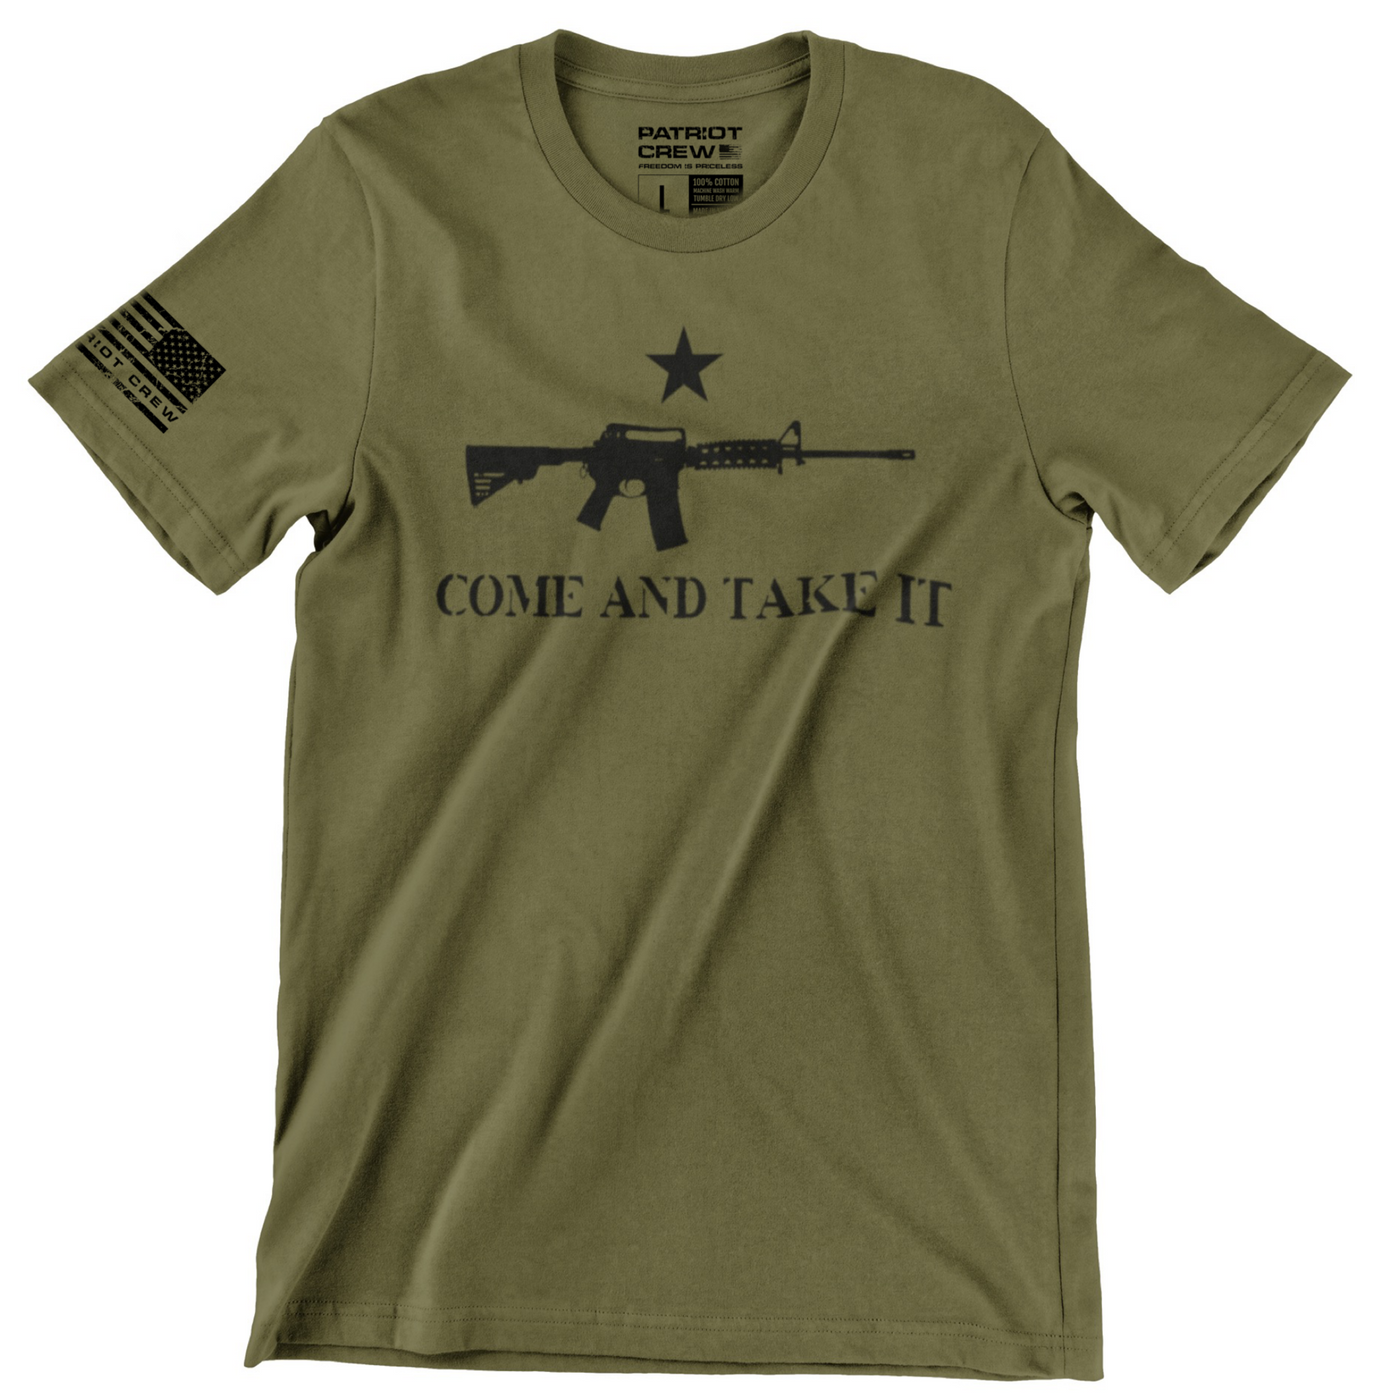 2nd Amendment T-Shirts